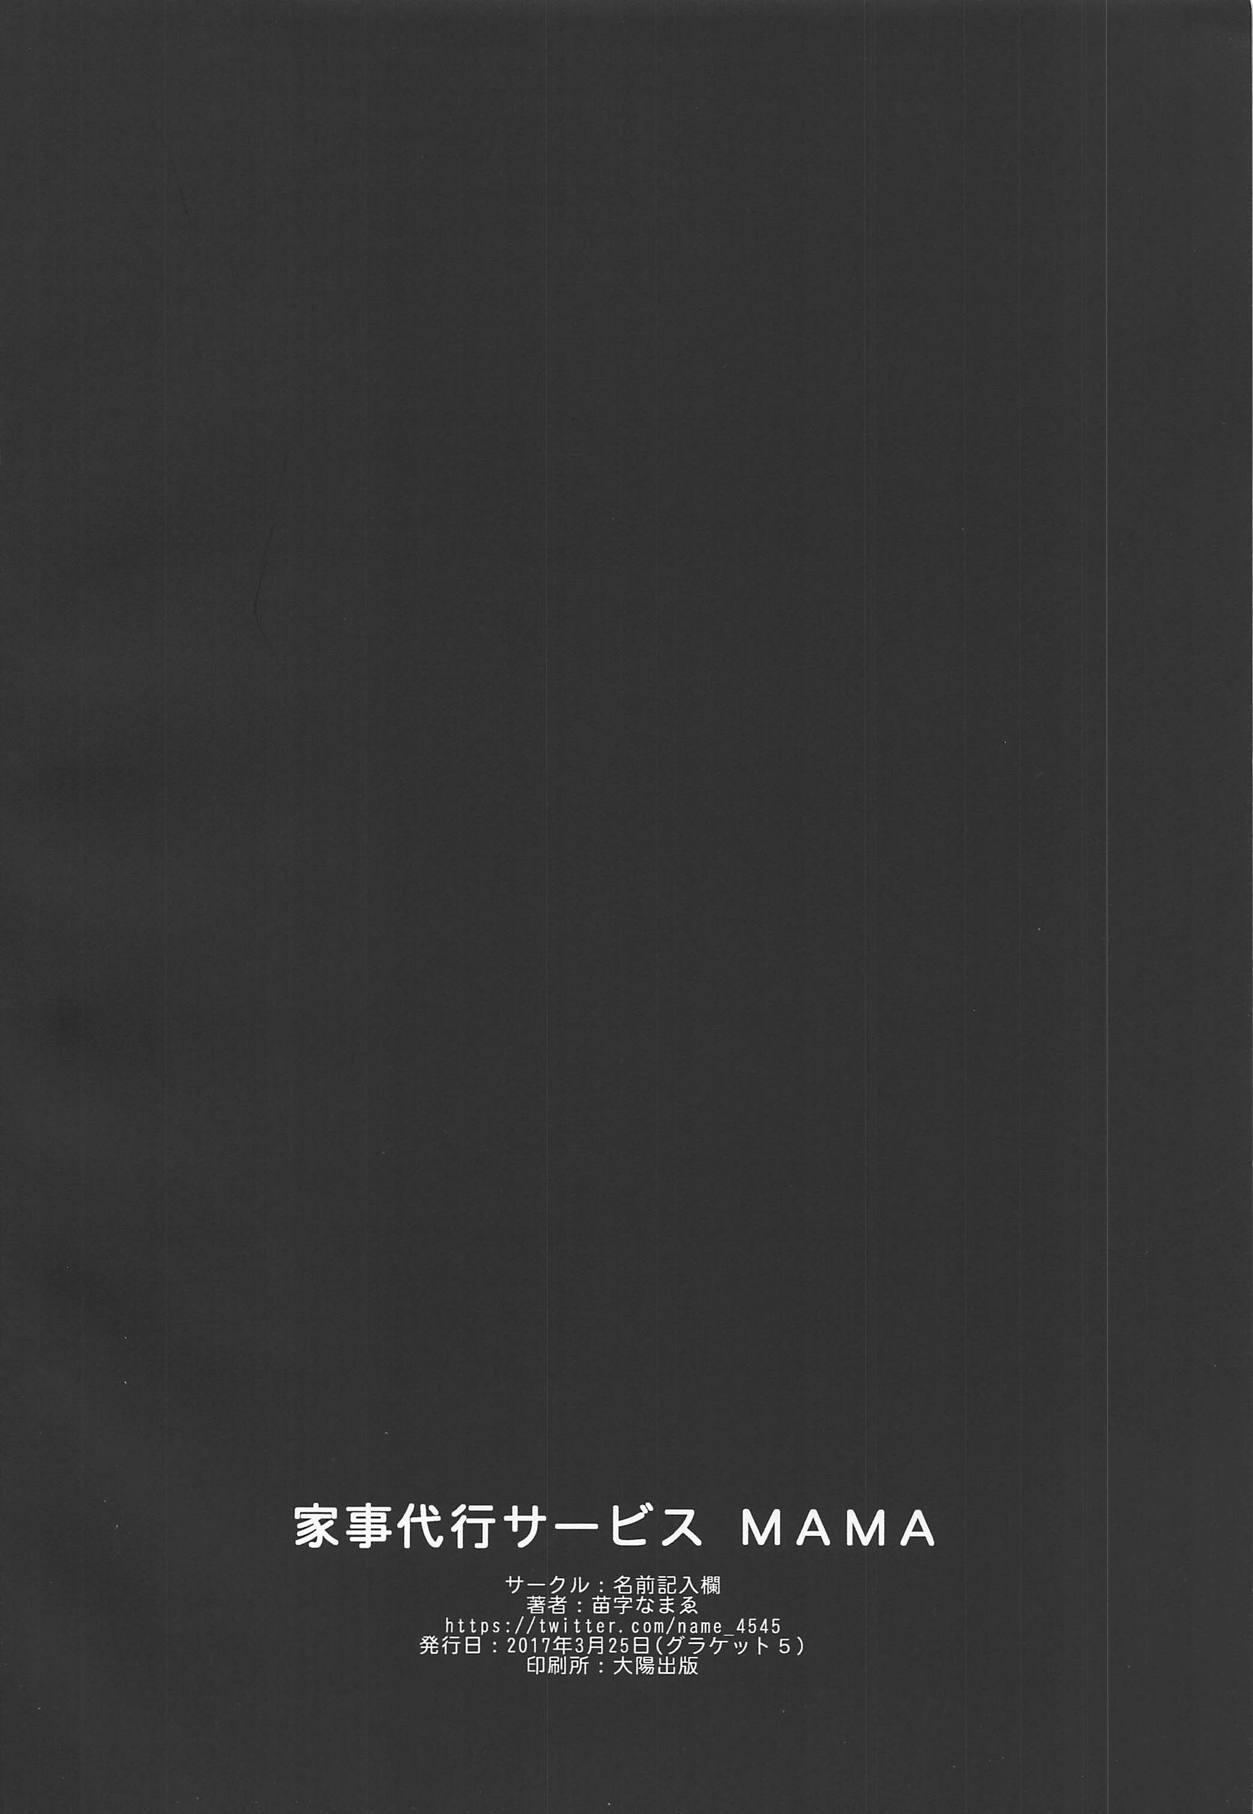 Kaji Daikou Service MAMA 11